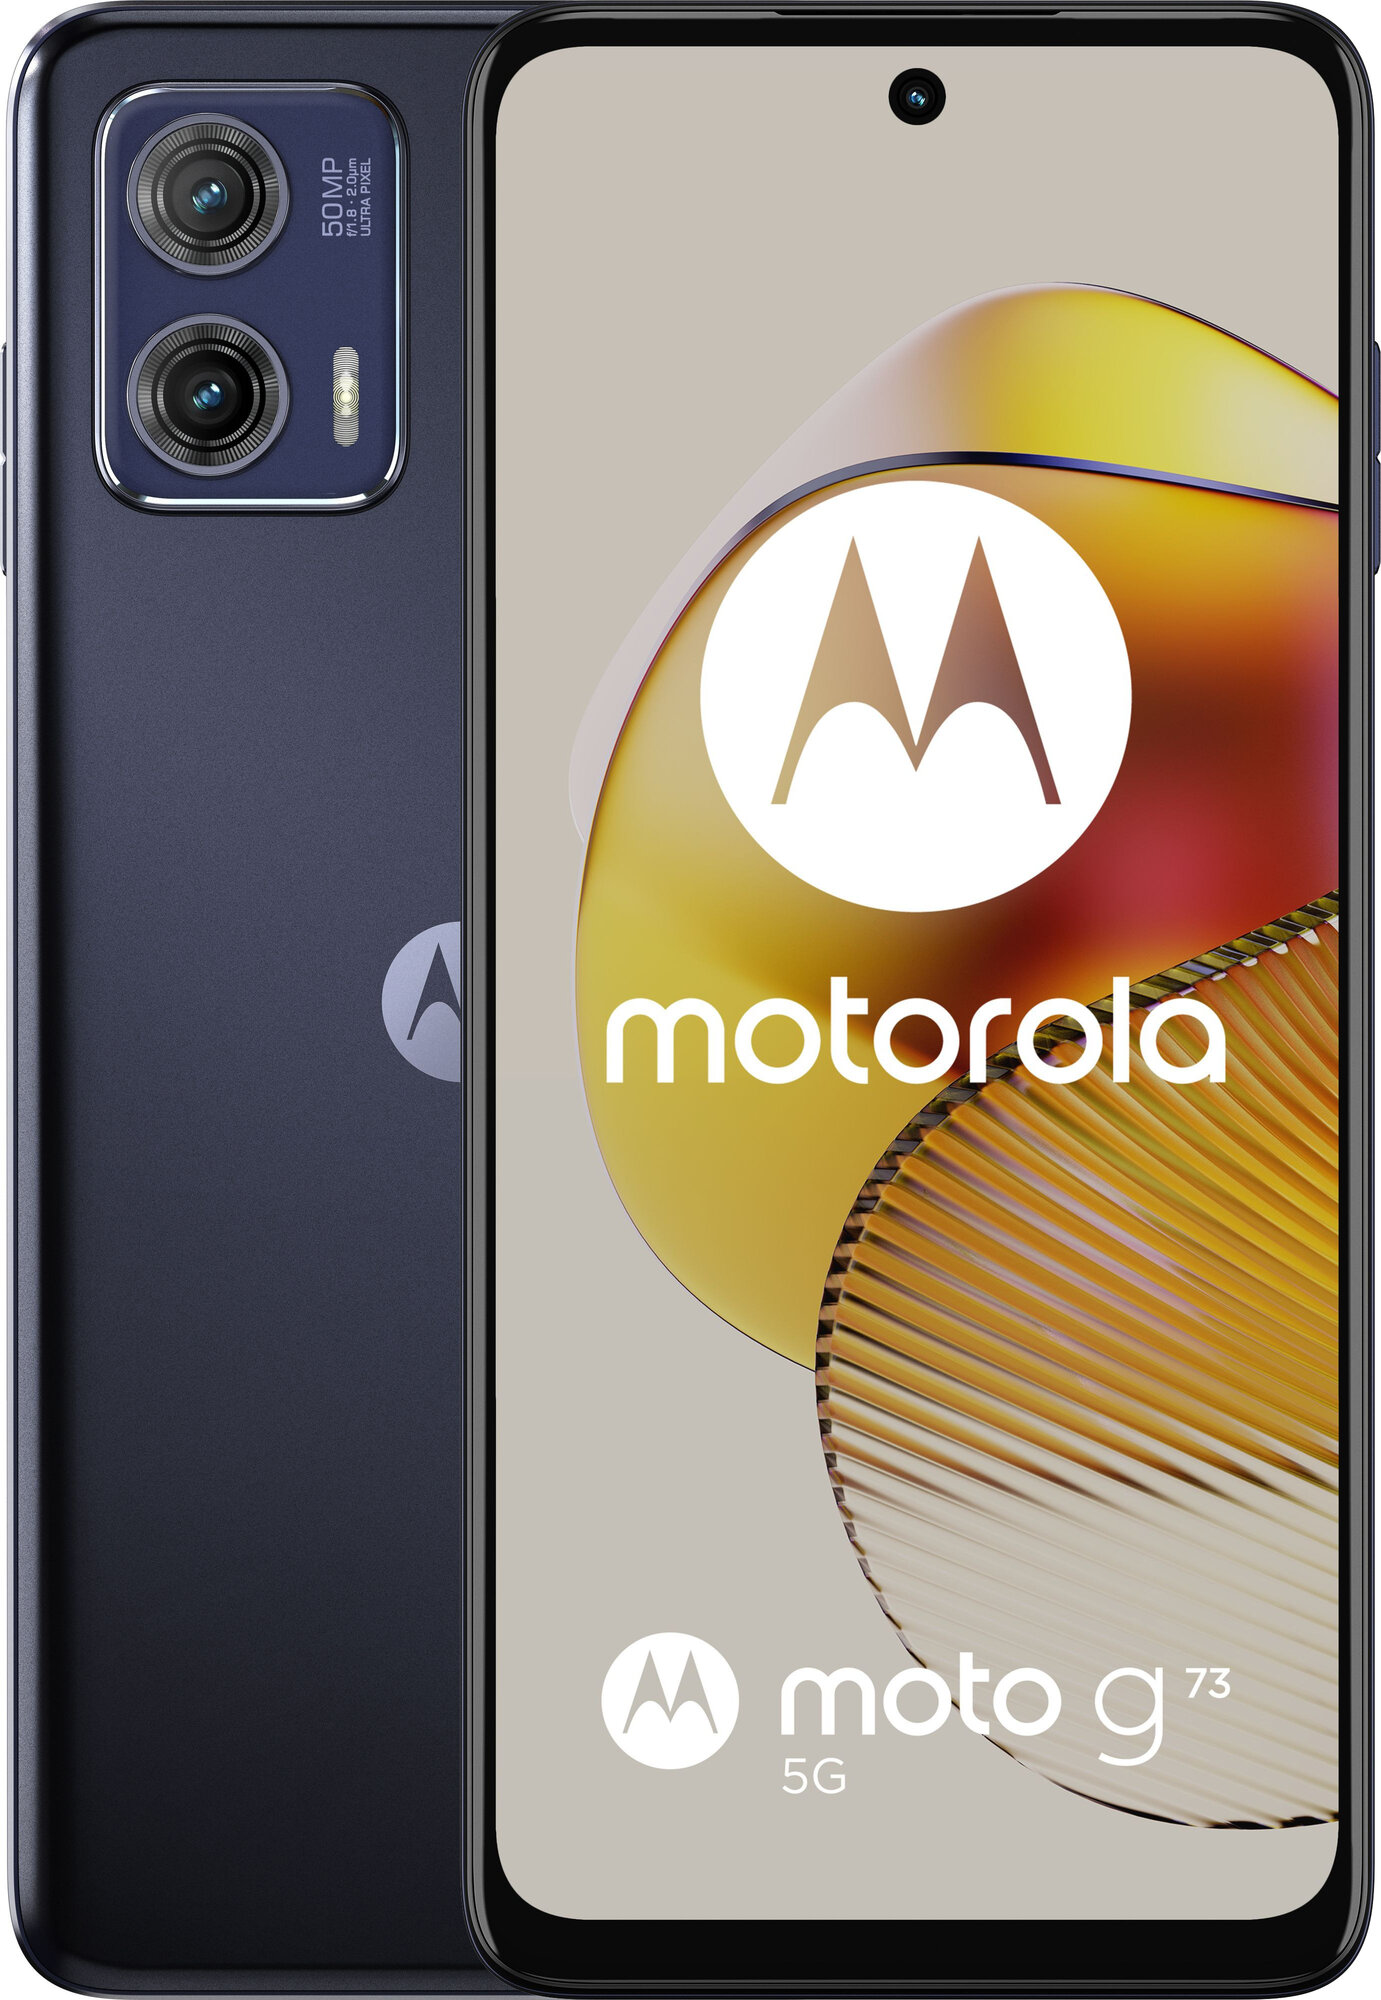 Смартфон Motorola XT2237-2 G73 5G 256Gb 8Gb синий моноблок 3G 4G 2Sim 6.5 1080x2400 Android 13 50Mpix 802.11 a/b/g/n/ac NFC GPS GSM900/1800 GSM1900 To